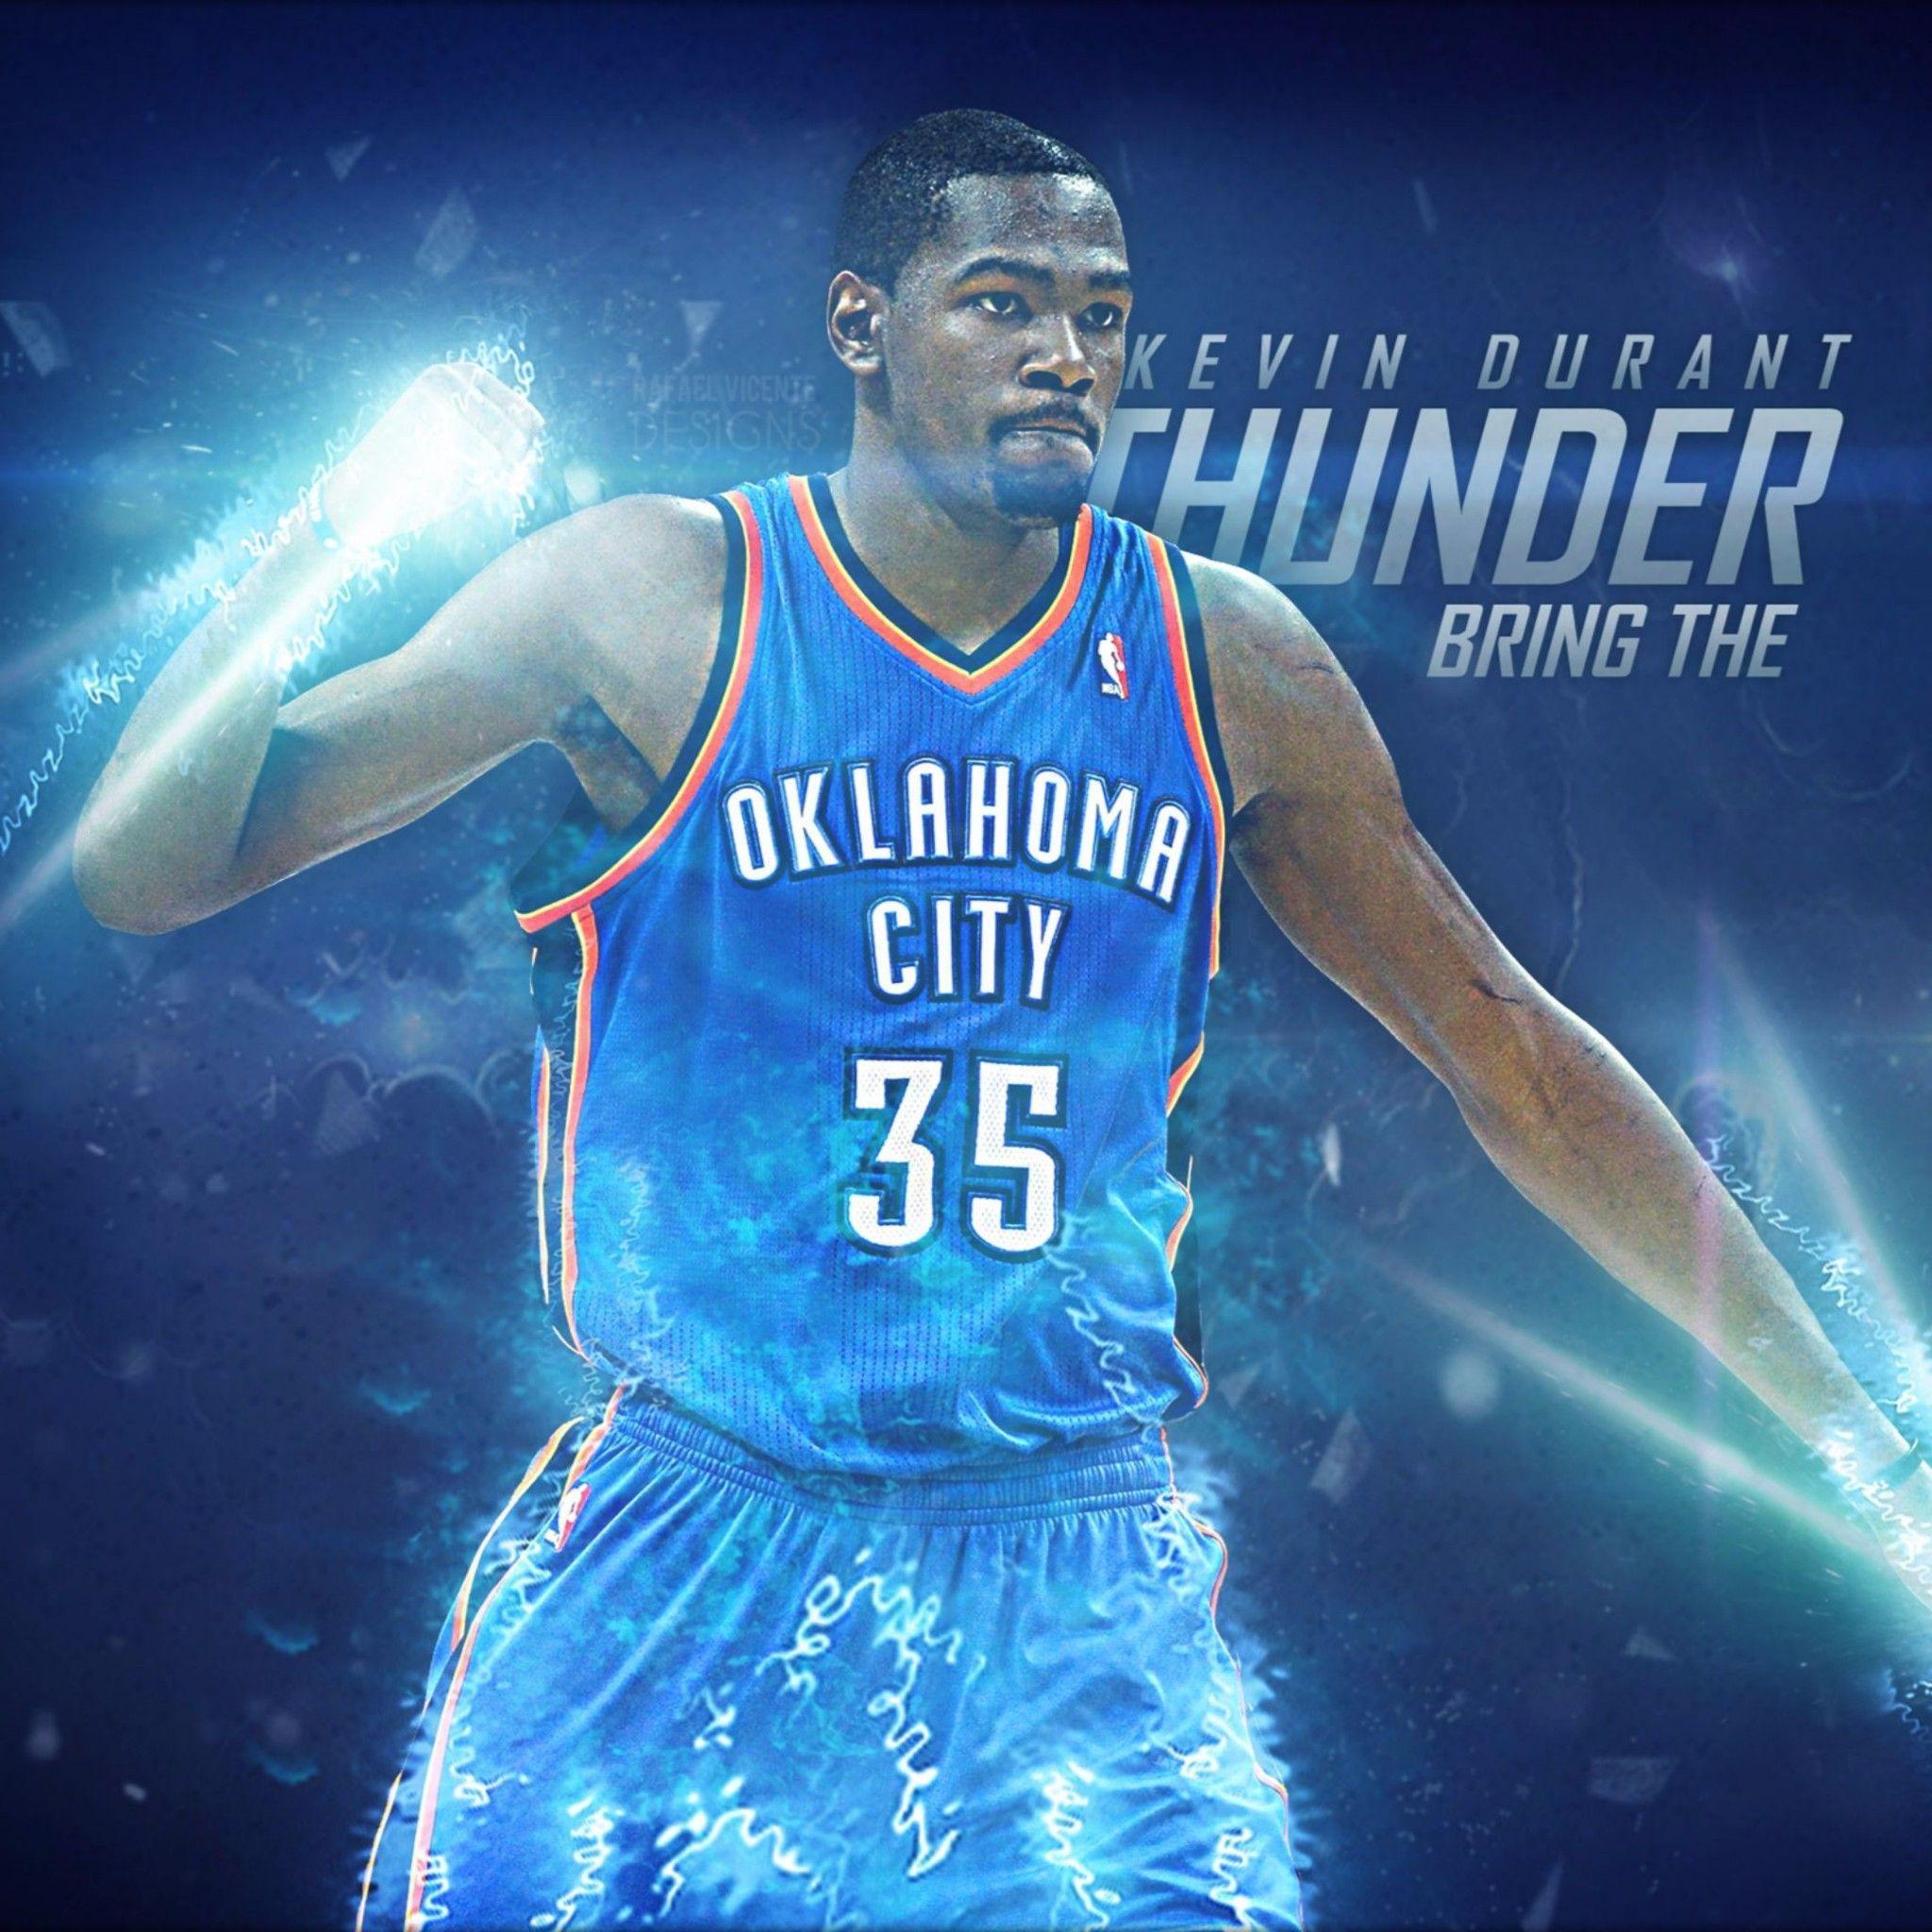 Bring the Thunder Kevin Durant 4K Wallpaper. Free 4K Wallpaper